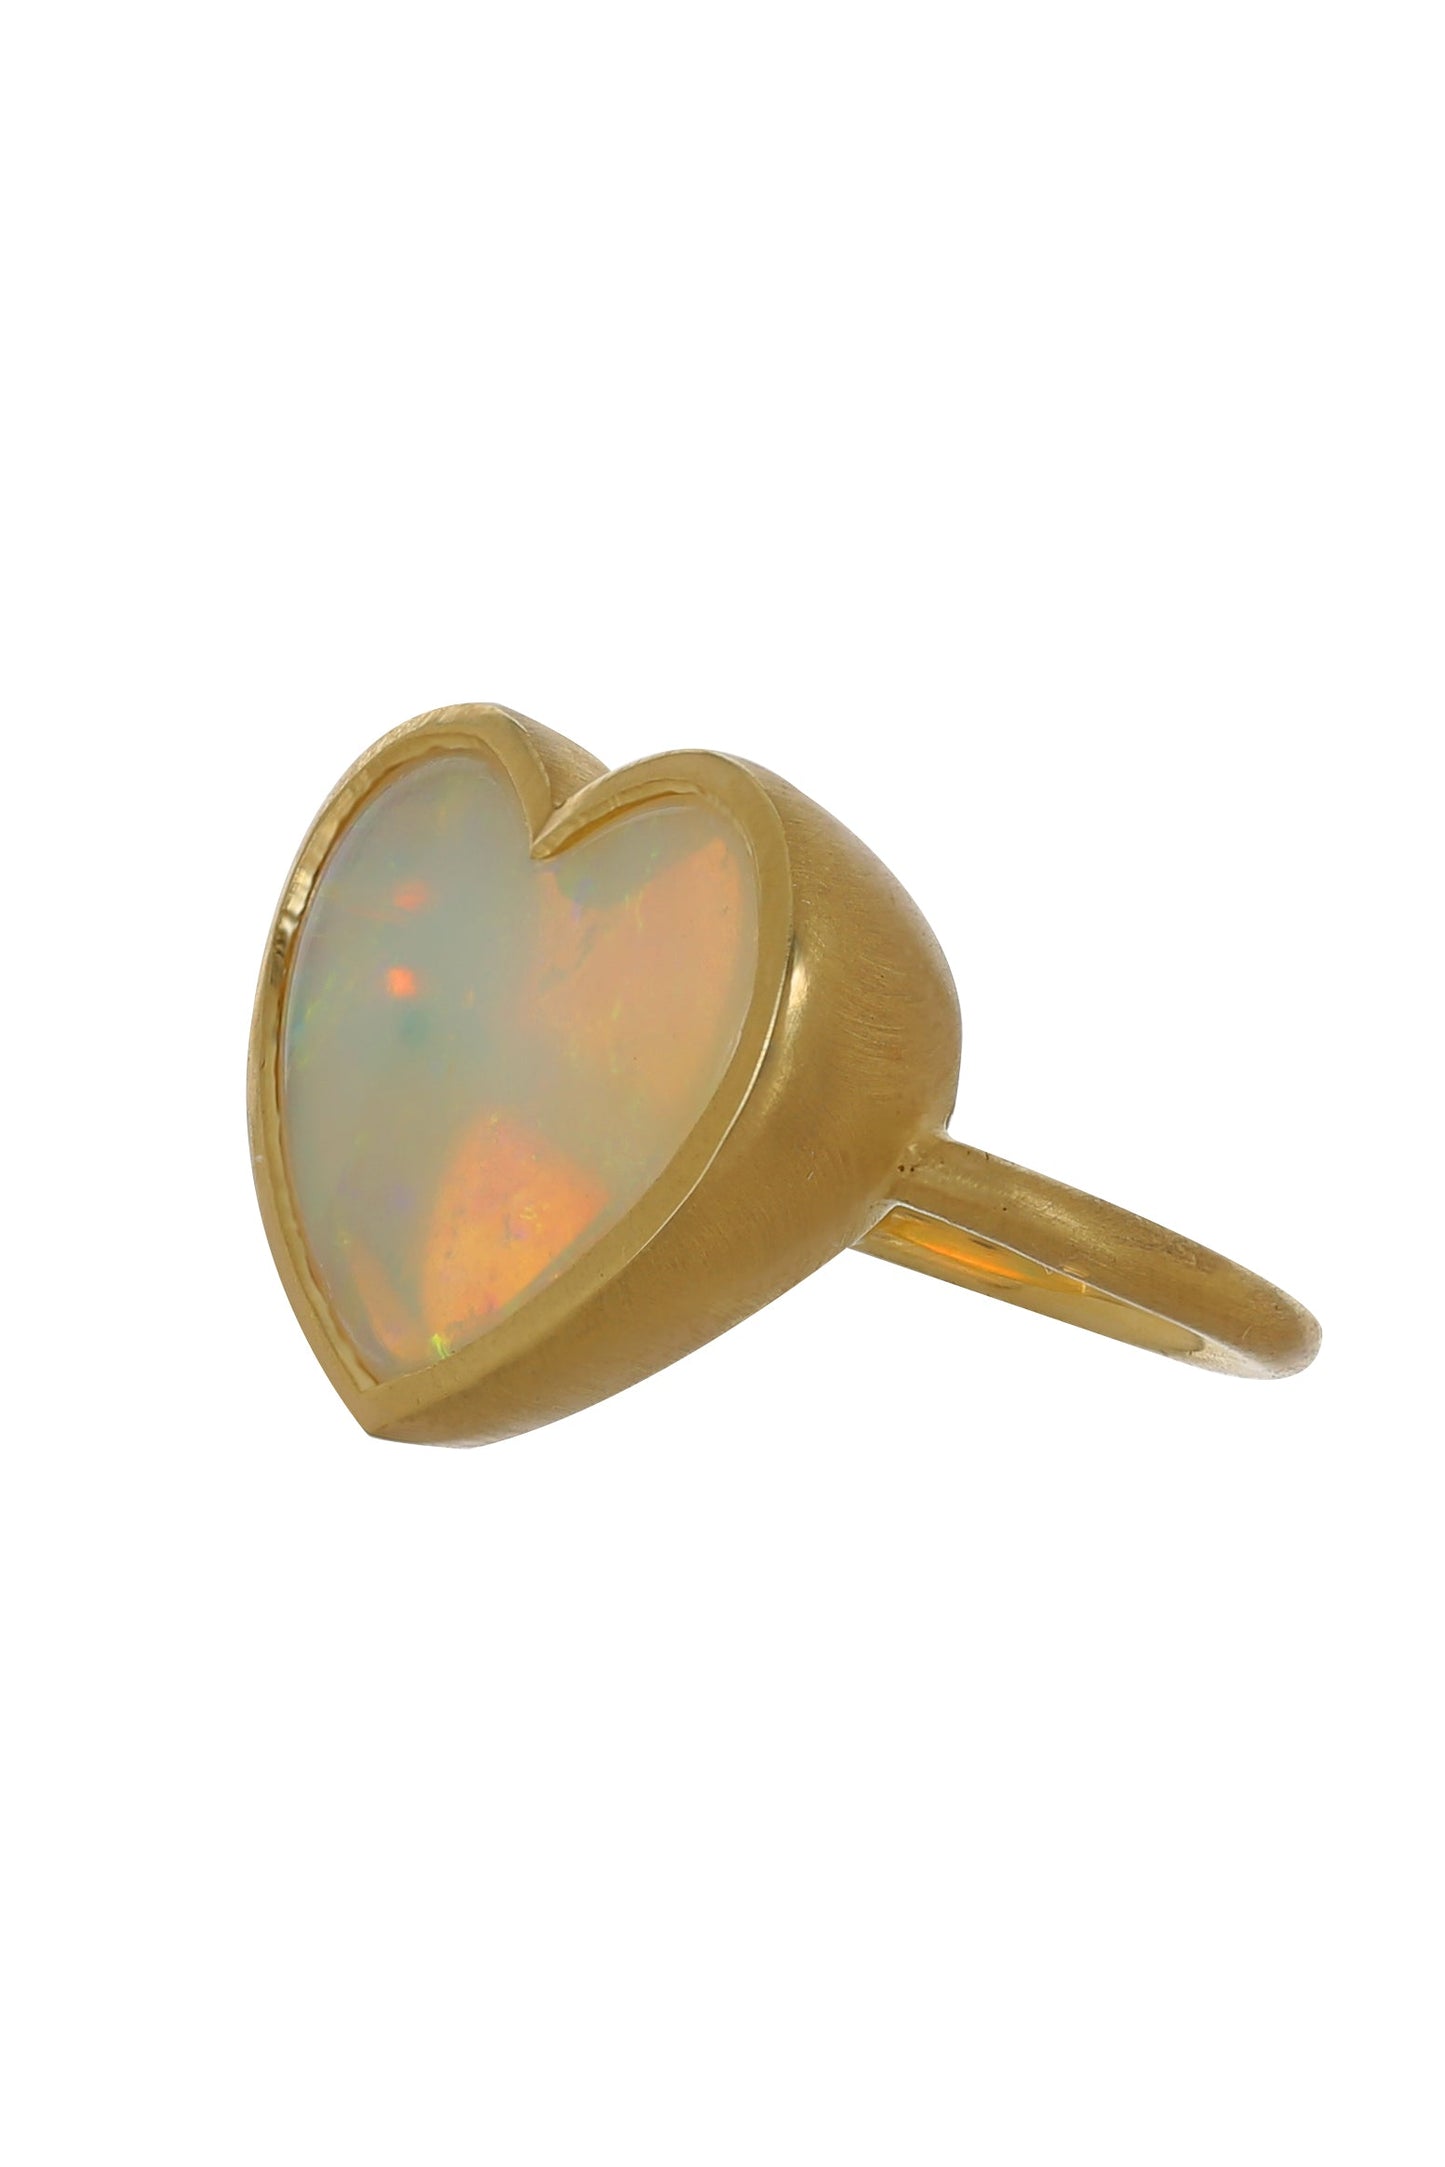 IRENE NEUWIRTH JEWELRY-Opal Heart Ring-YELLOW GOLD